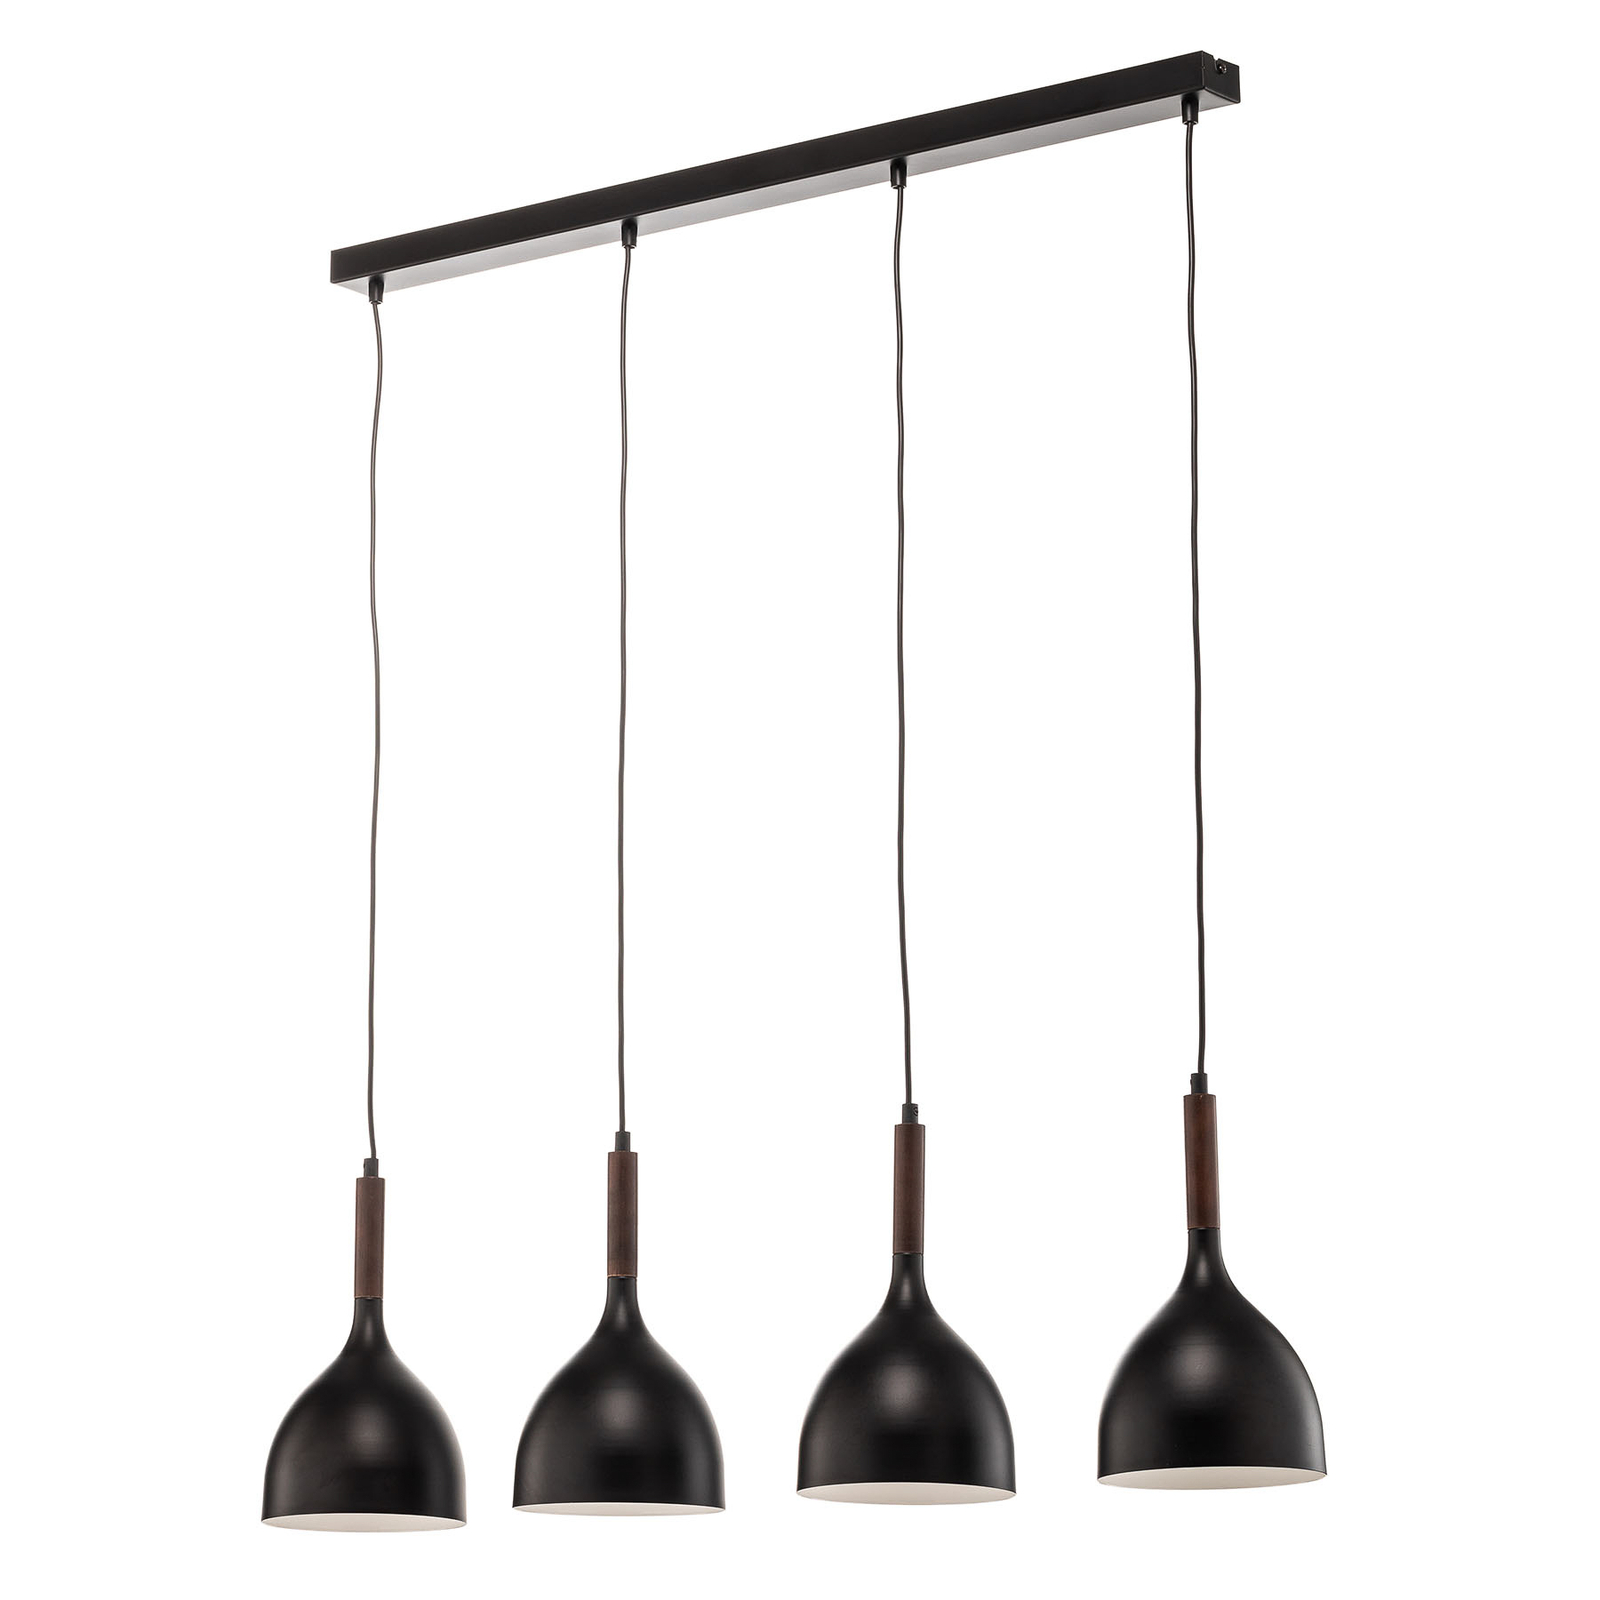 Noak hanglamp 4-lamps lang naturel/zwart hout